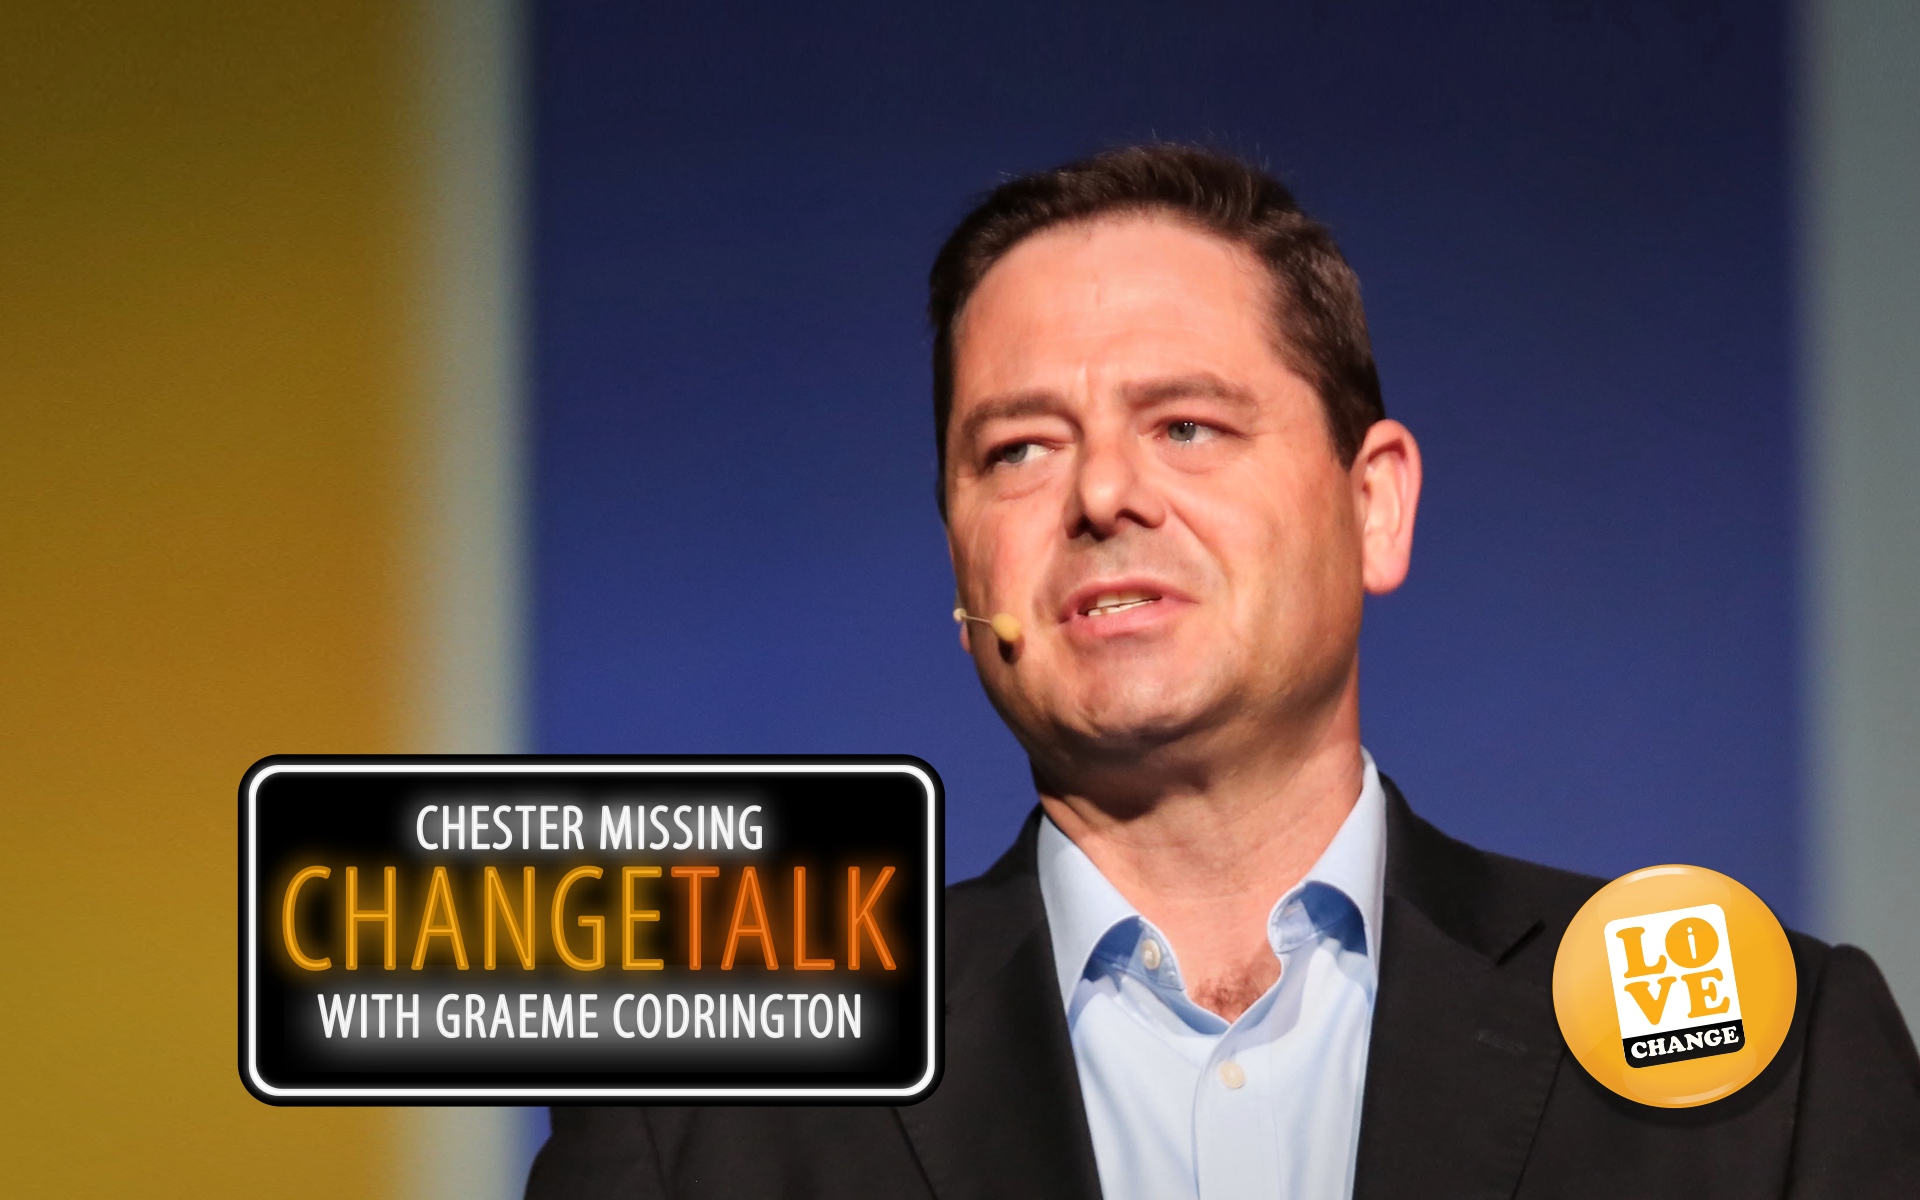 Change Talk - Chester Missing with Graham Codrington